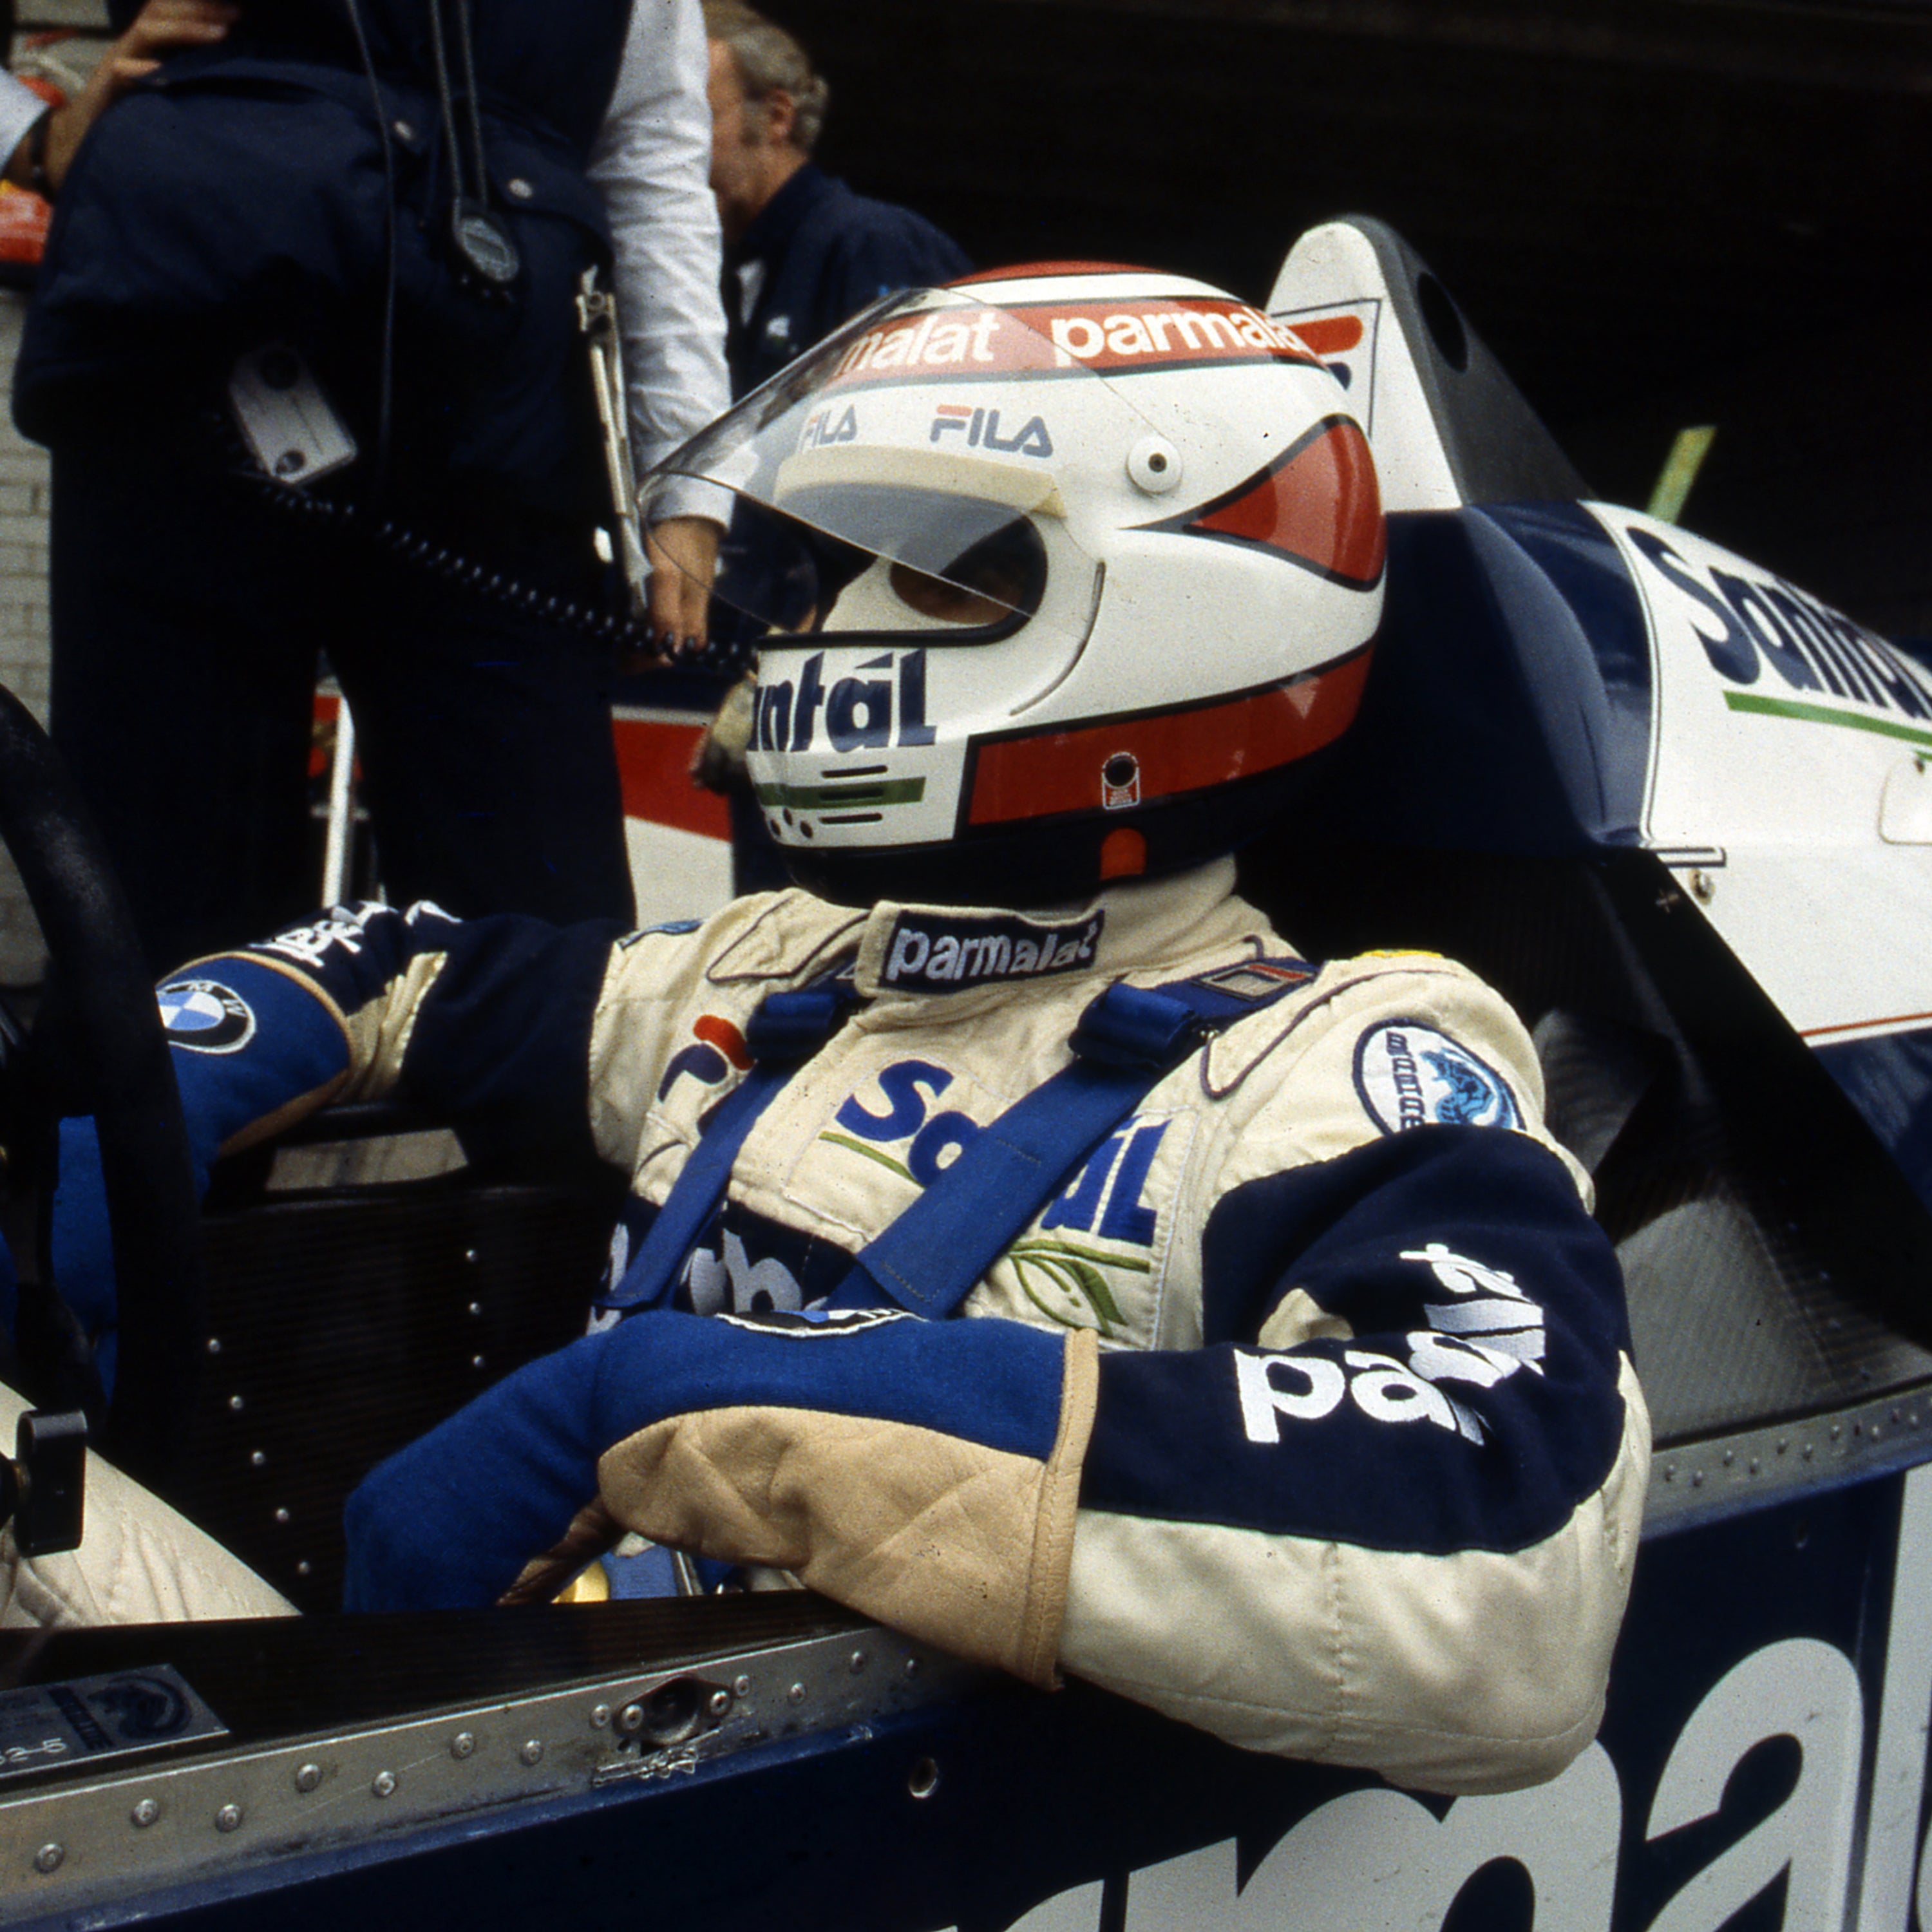 Nelson Piquet 1983 Signed Replica Helmet